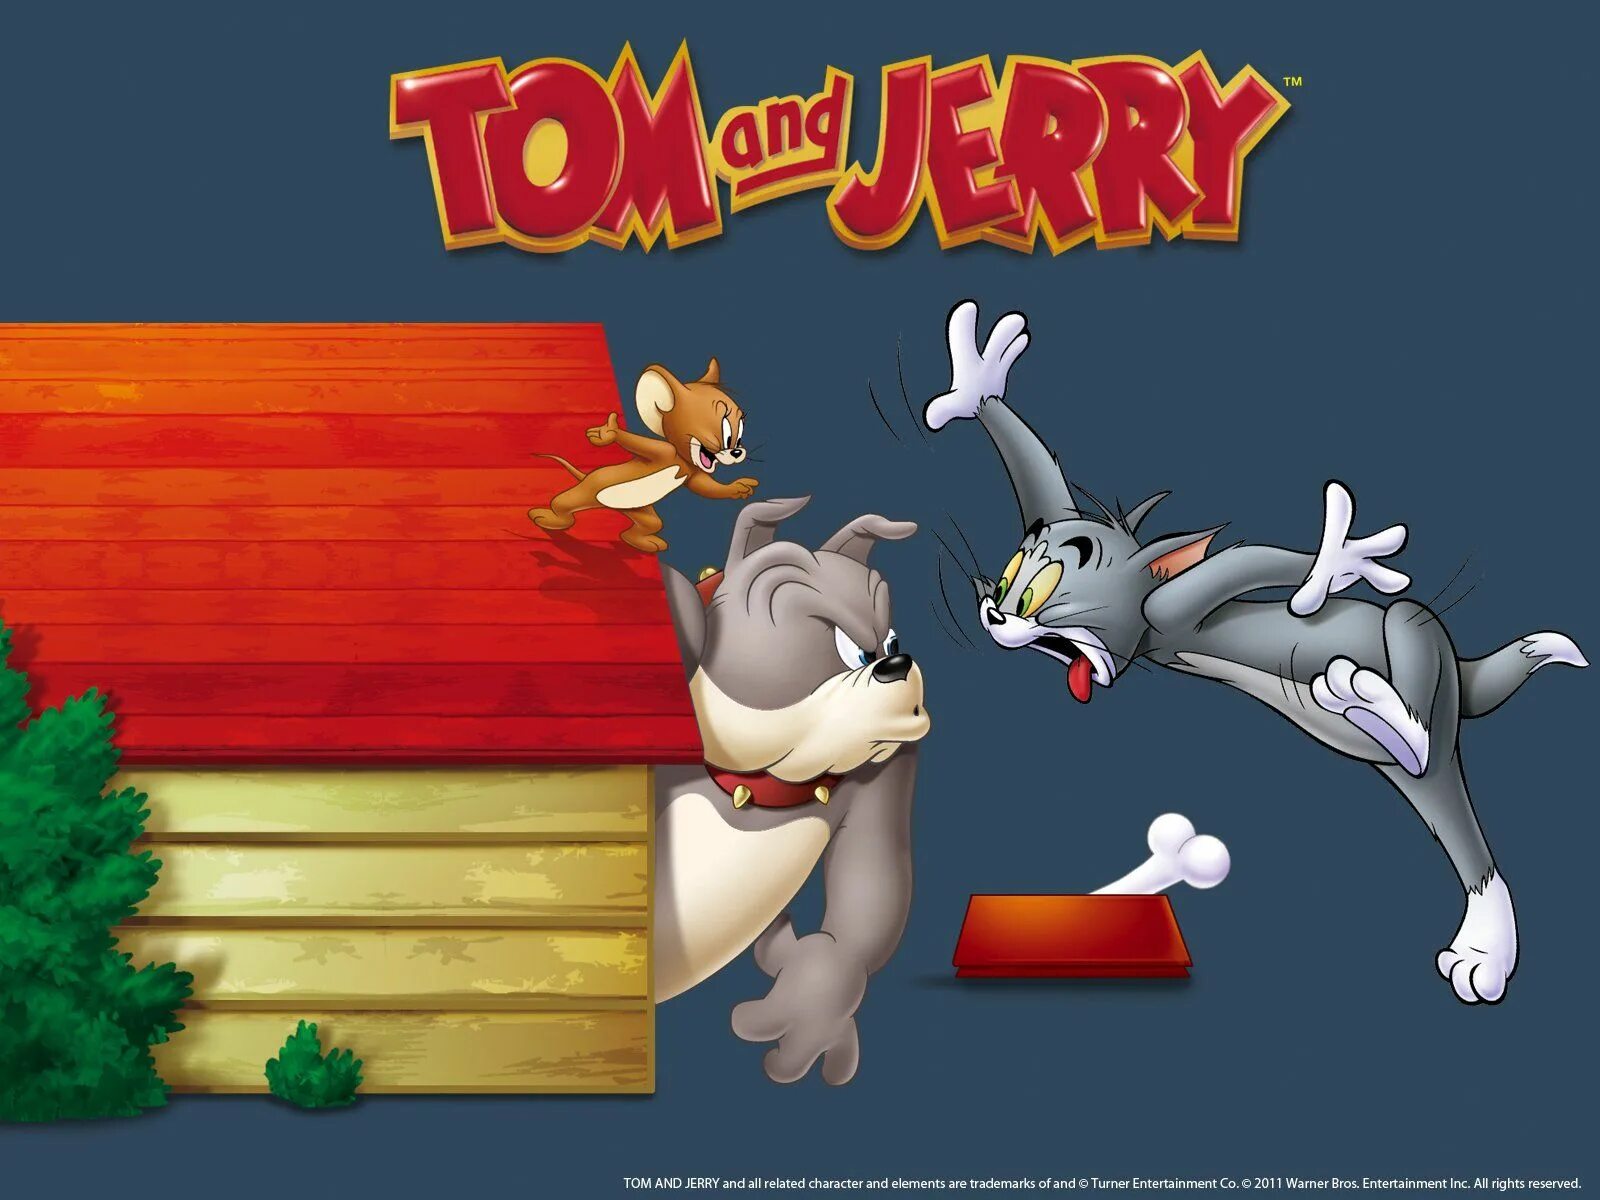 Tom and Jerry 2021. Том и Джерри / Tom and Jerry (2021). Том и Джерри фото. Том и Джерри 2020. Том и джерри новогодние